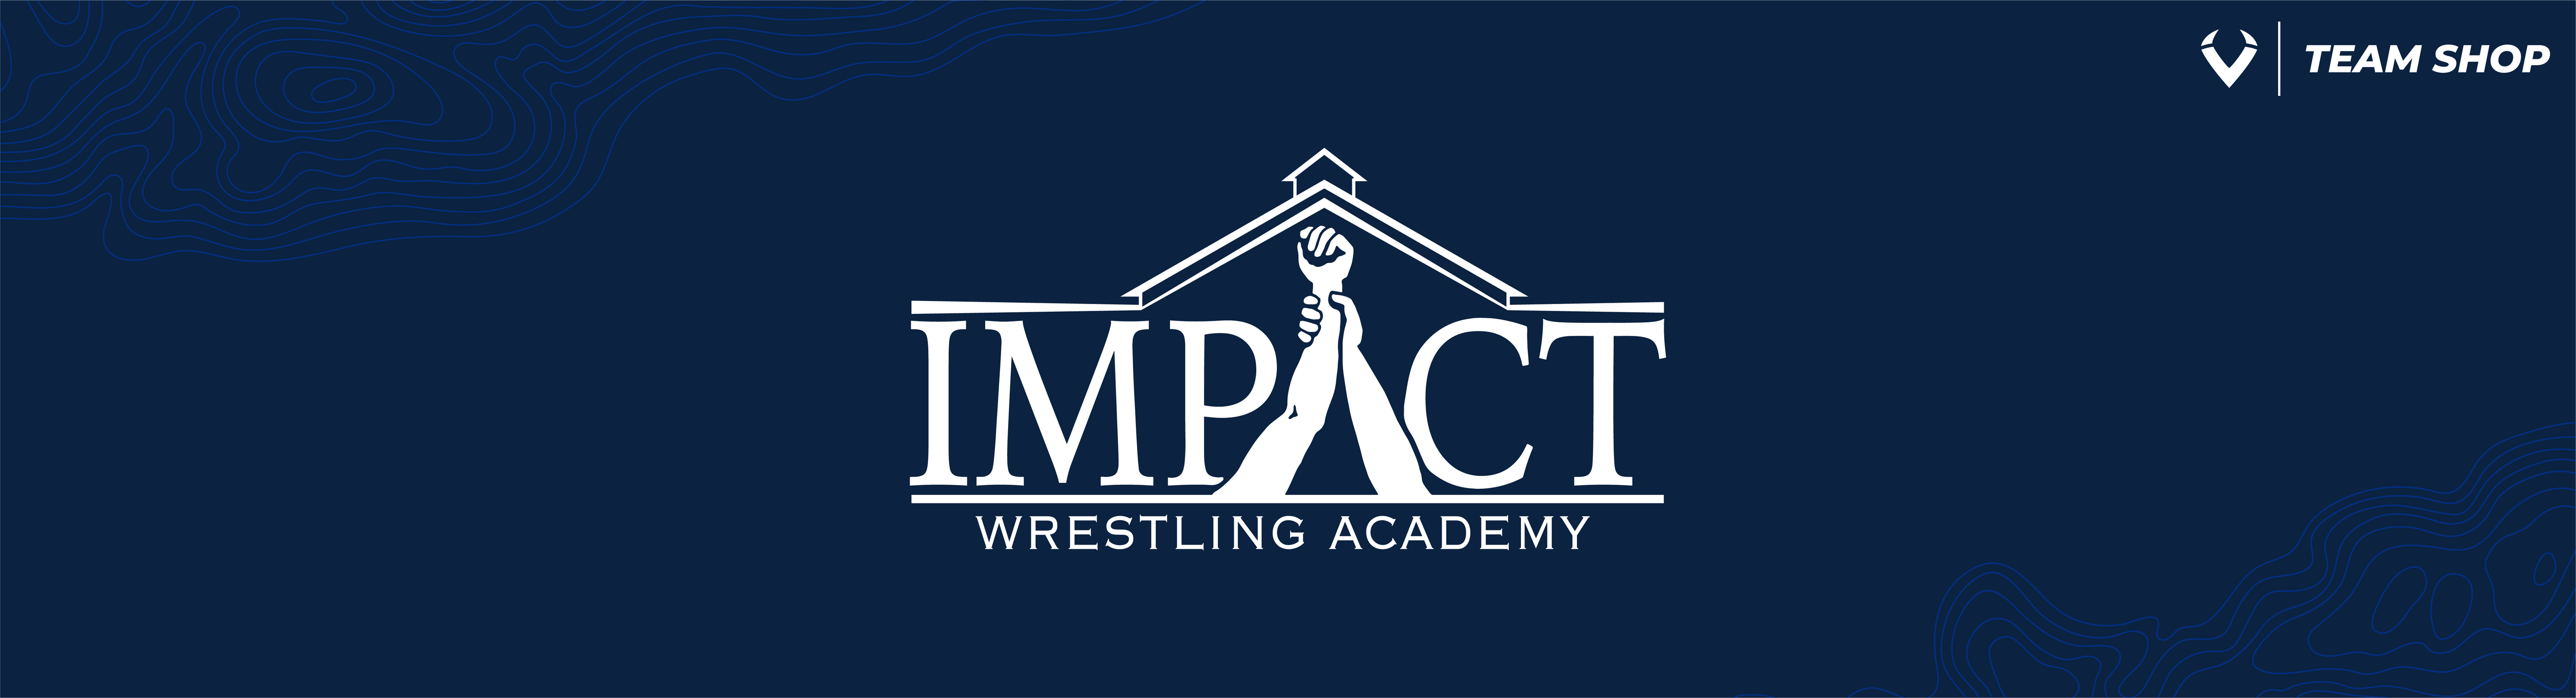 Impact Wrestling Academy